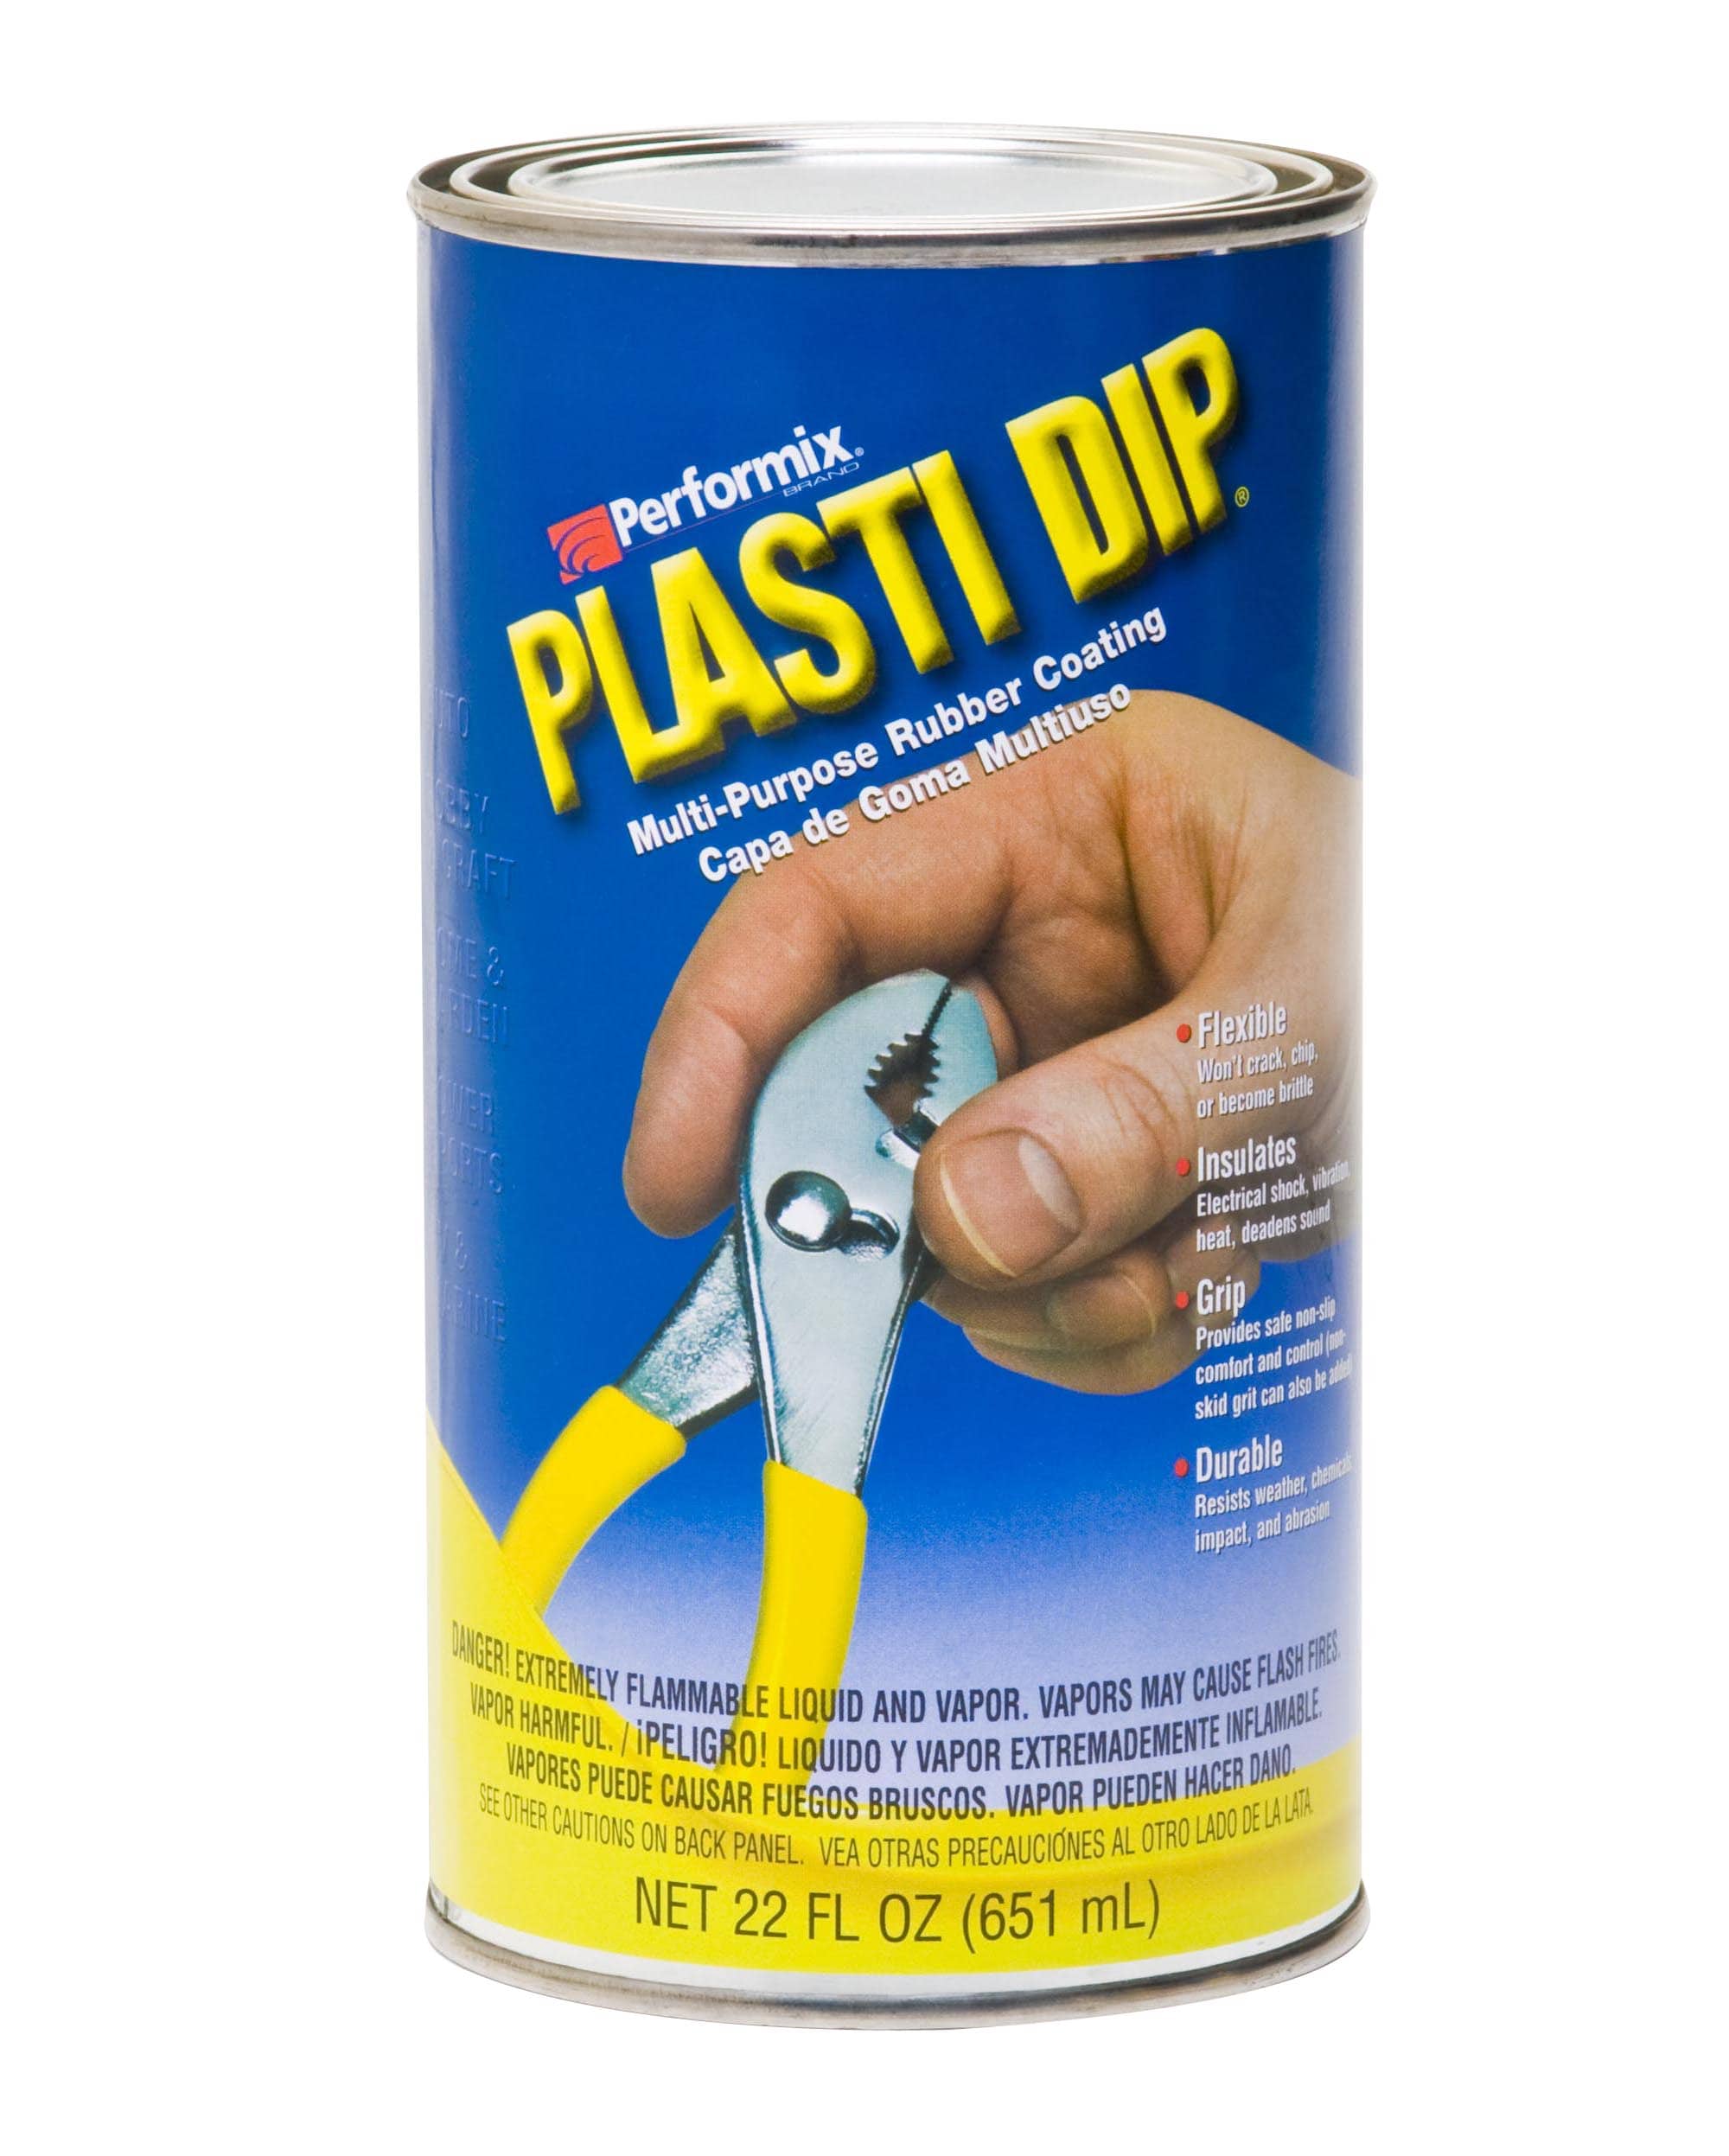 Plasti Dip Glossifier, 11oz Spray, Case of 6